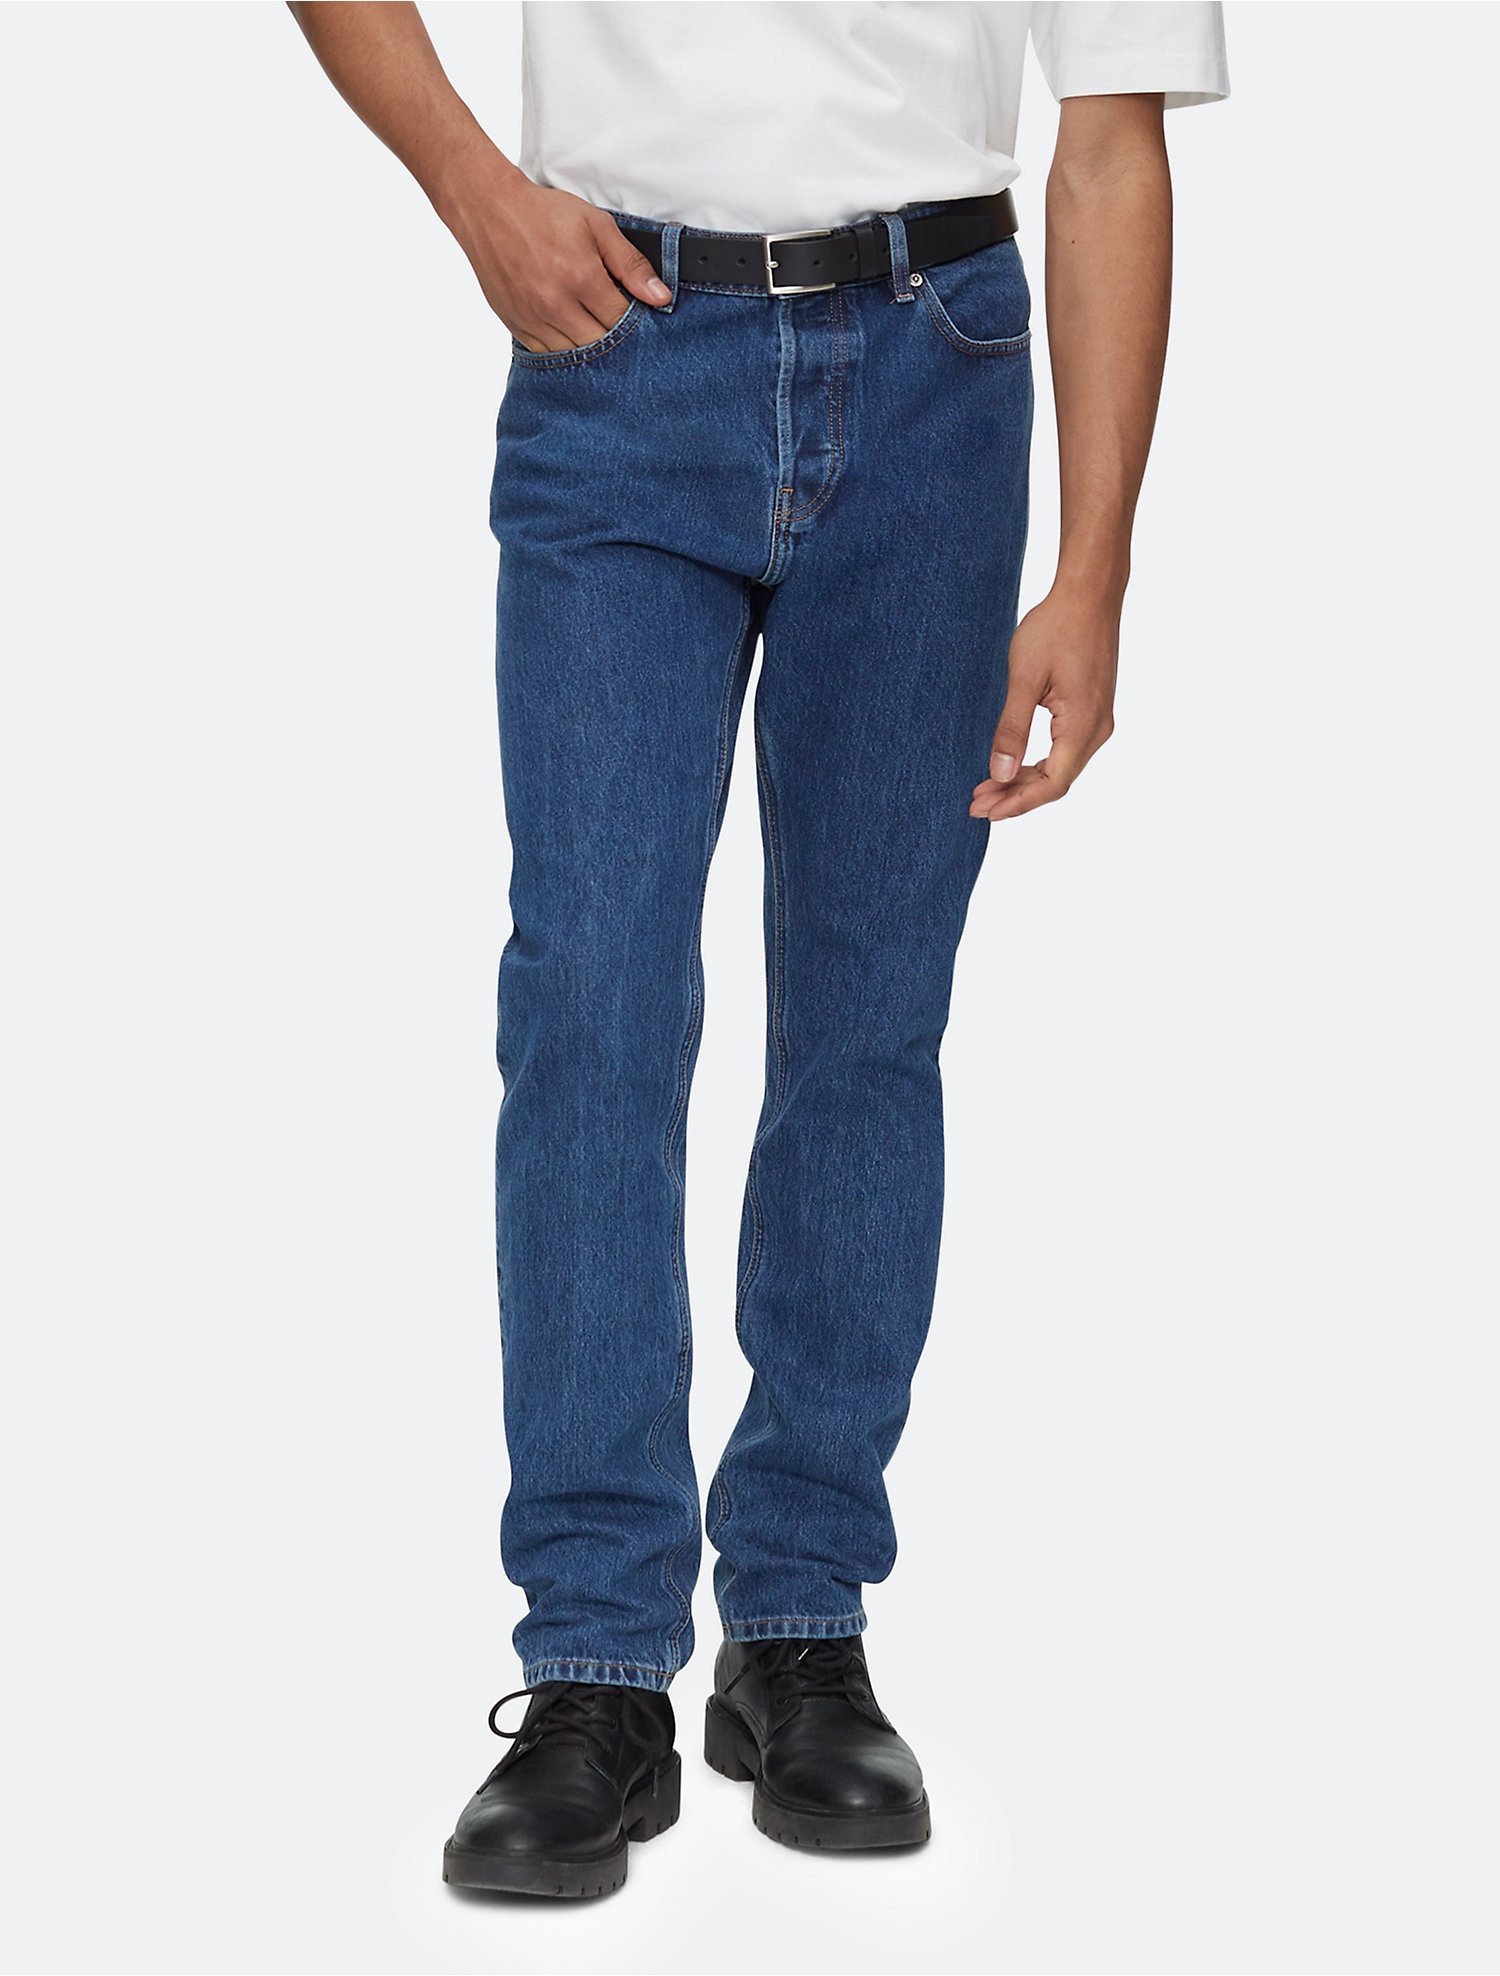 Voorafgaan Moeras herberg Slim Straight Fit Gravel Stone Indigo Jeans | Calvin Klein® USA